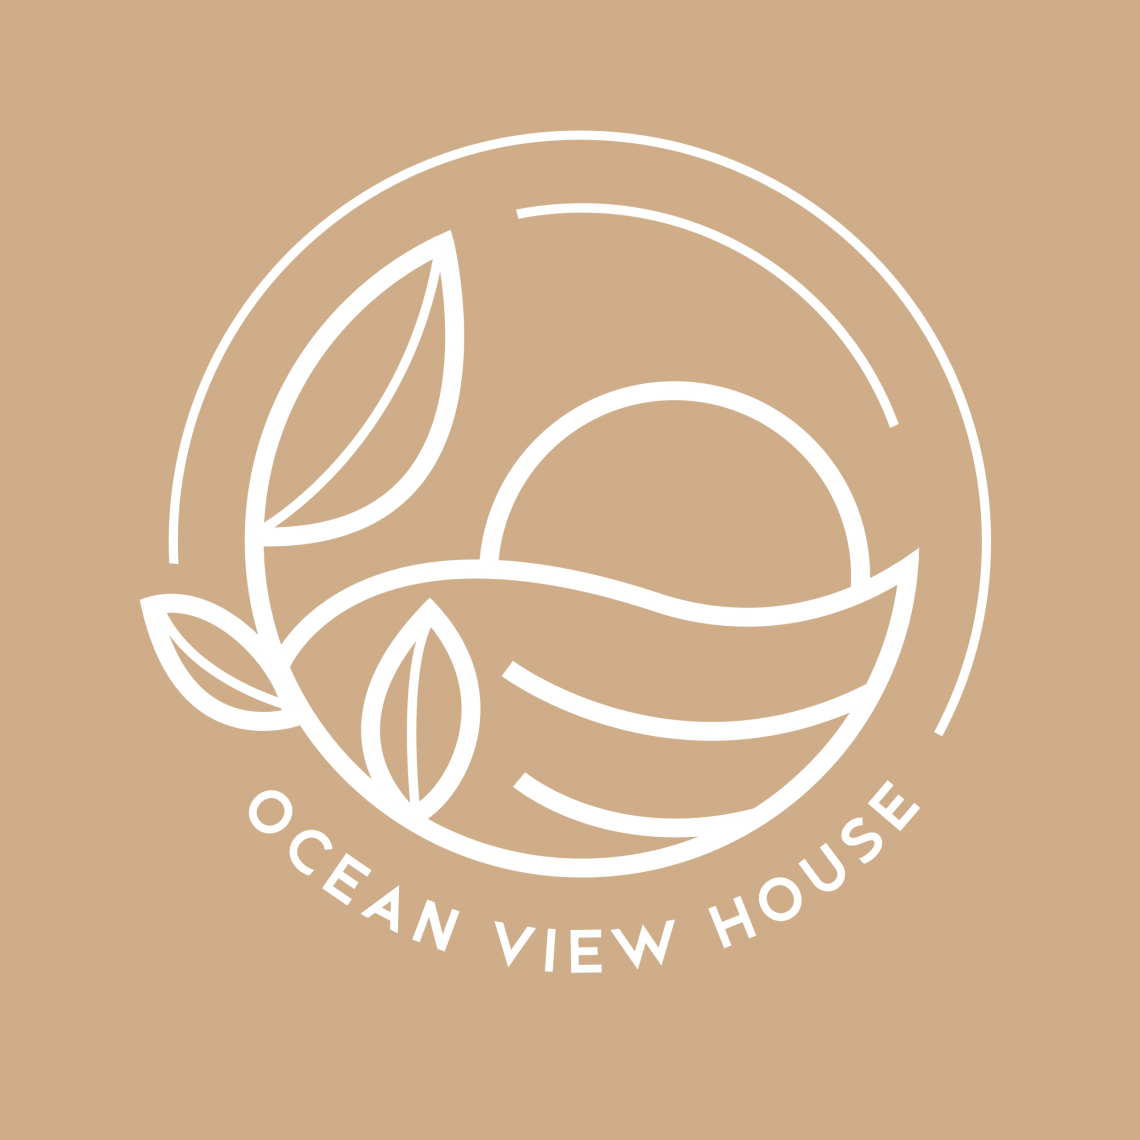 Hotel Names - Ocean View House